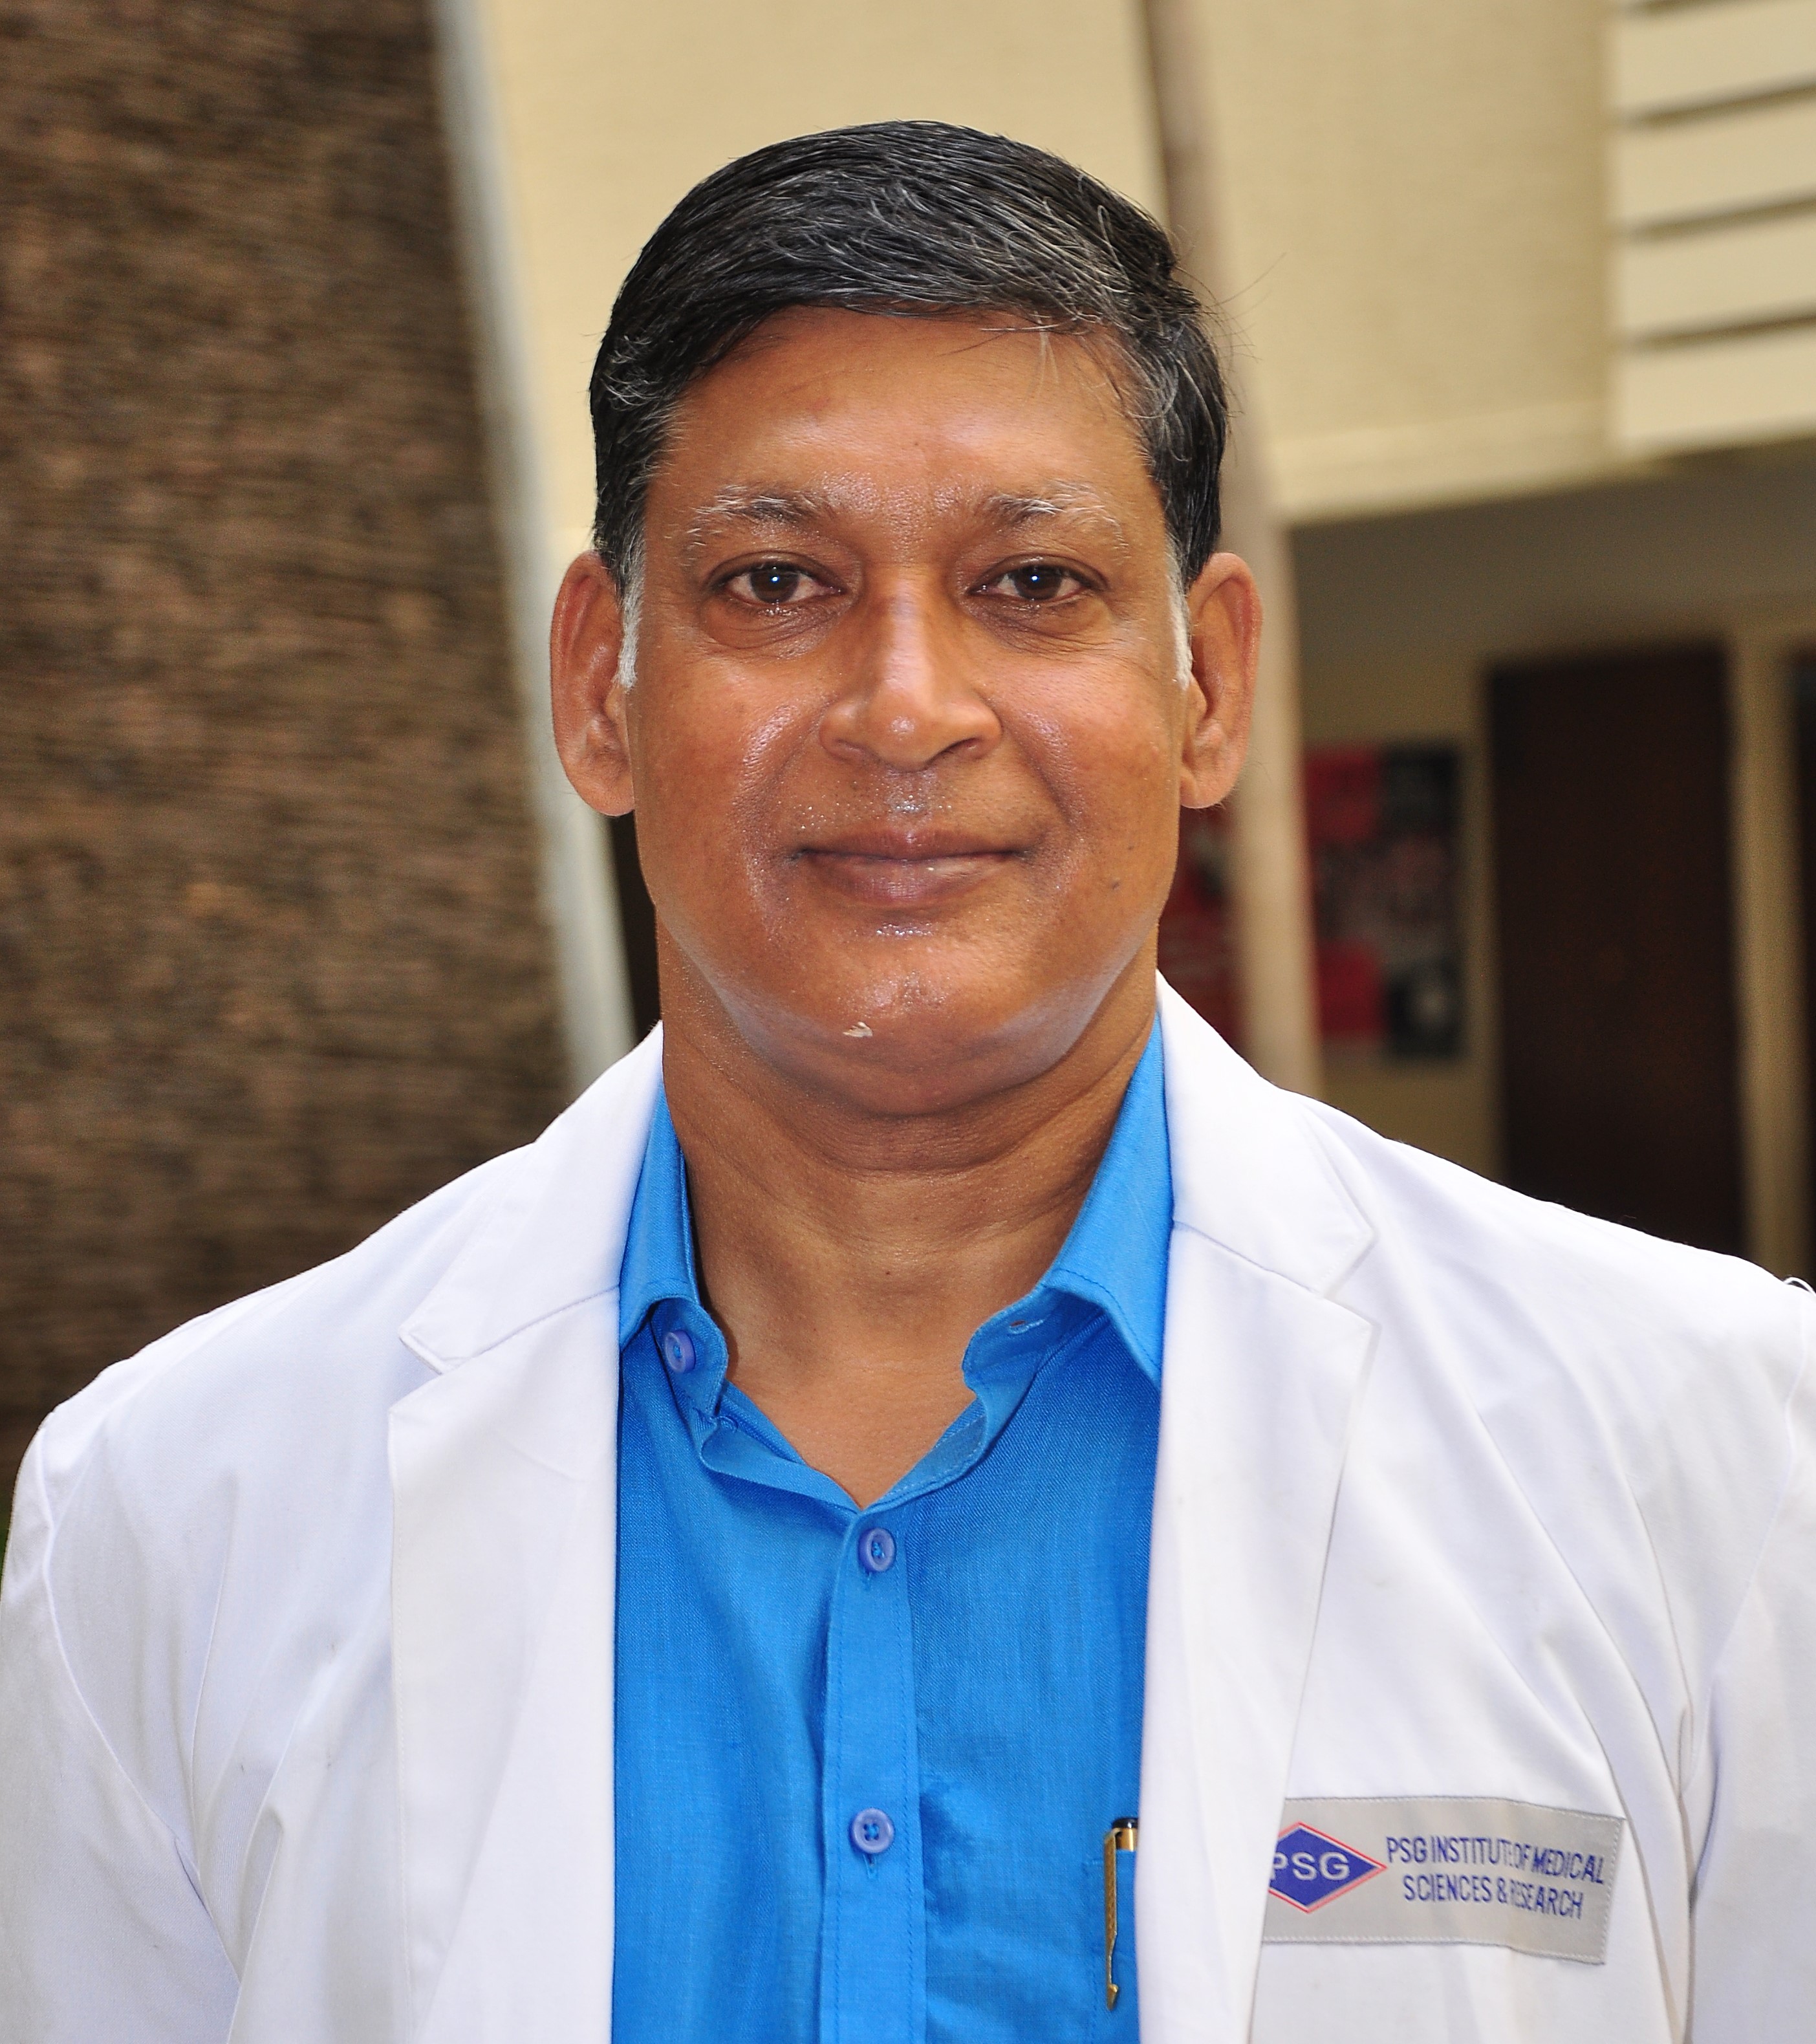 Dr. Sheik Afzal Rubby